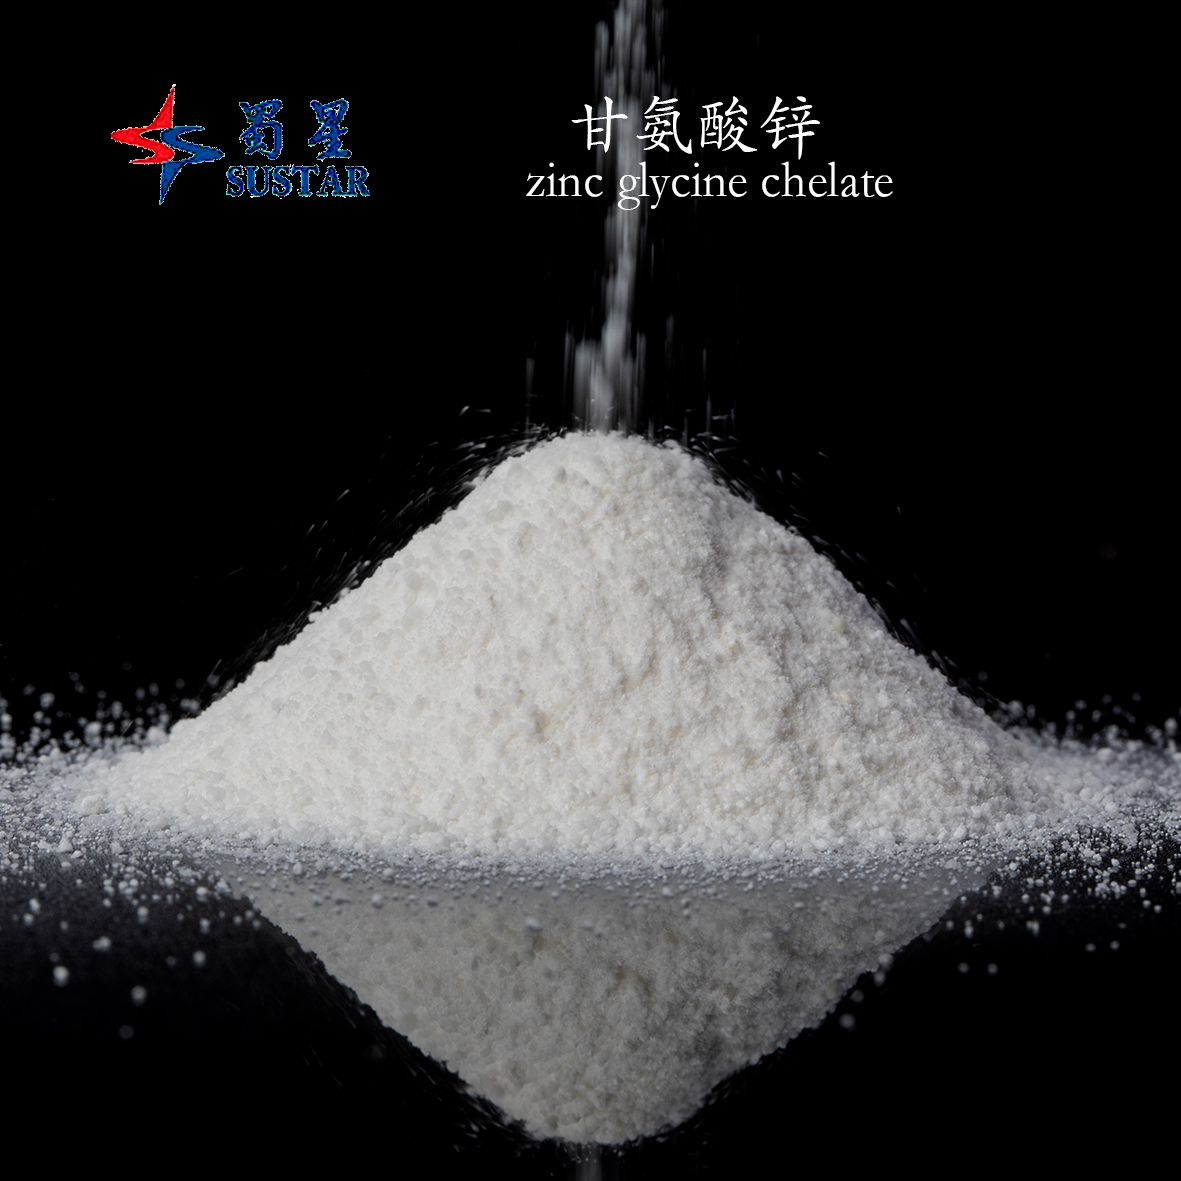 Zinc Glycine Chelate Glycine Zinc Complex Compound White Crystalline Powder Animal Feed Additive